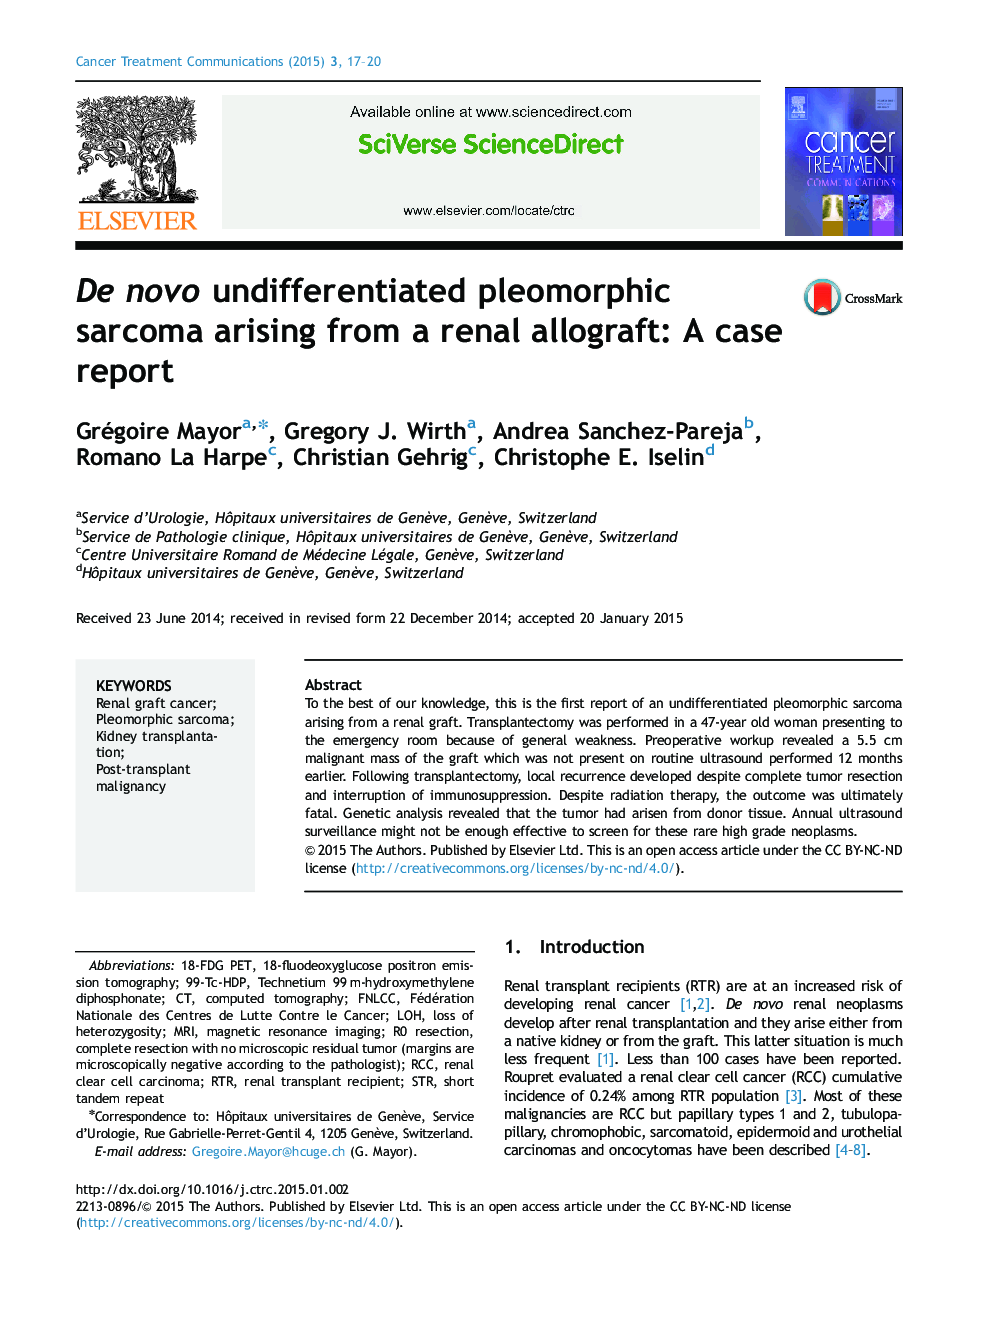 De novo undifferentiated pleomorphic sarcoma arising from a renal allograft: A case report